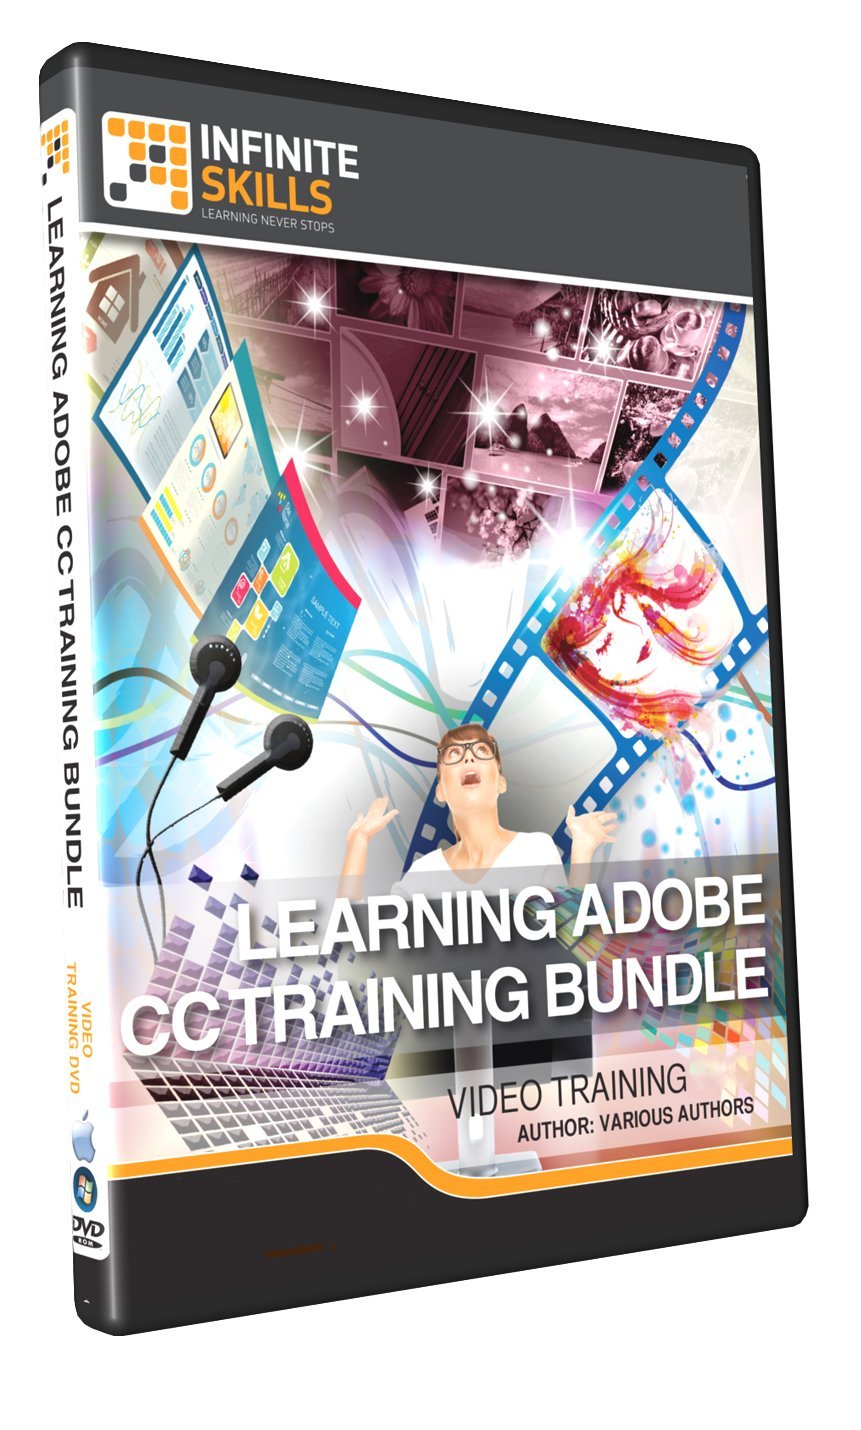 Adobe CC Training Bundle